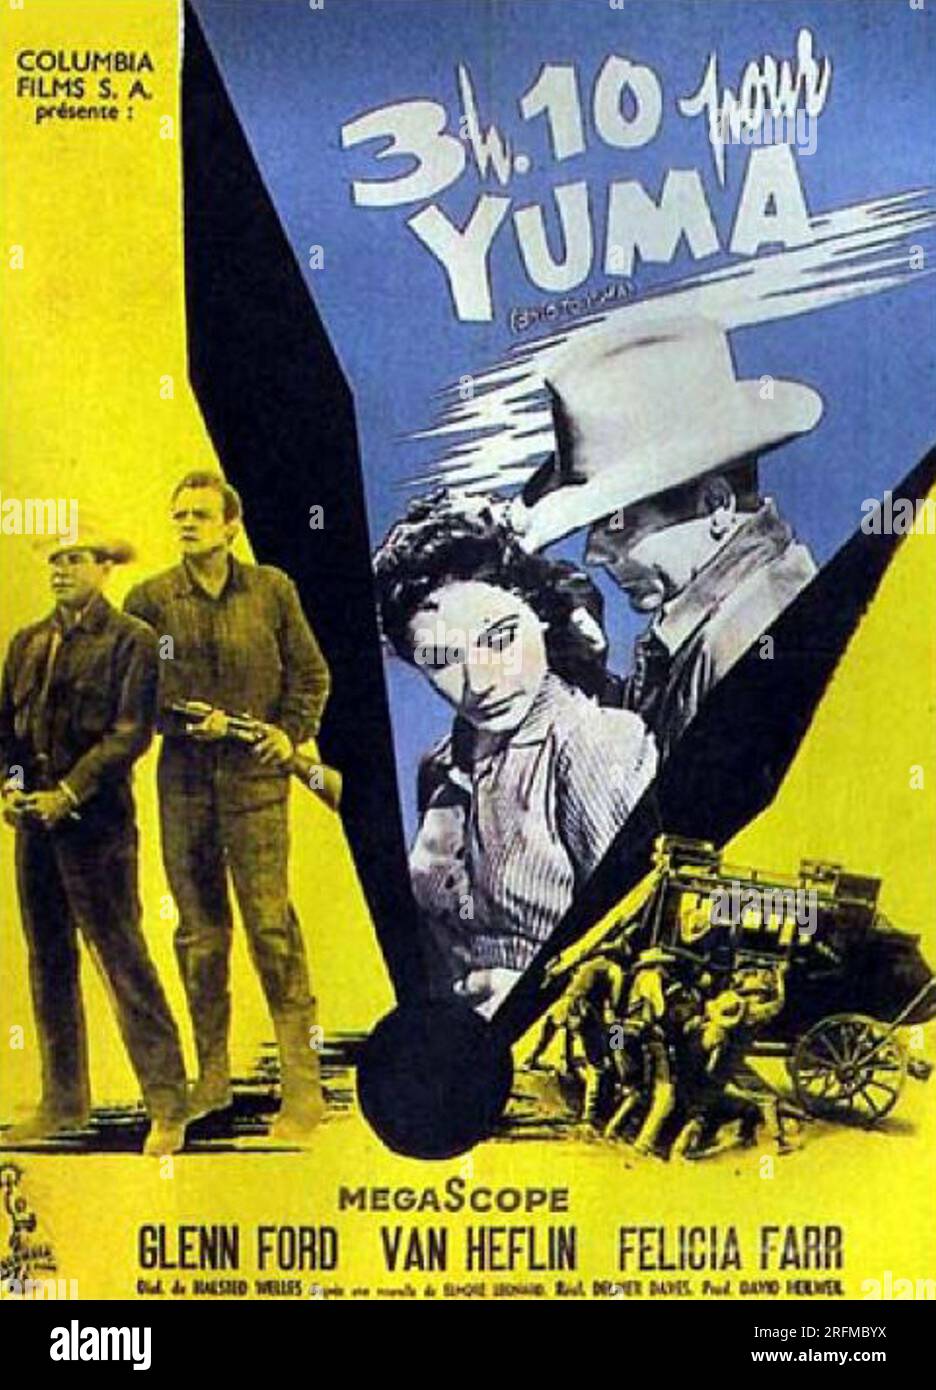 3:10 to Yuma' starring Glen Ford, Van Heflin and Felicia Farr a 1957 American western film. Stock Photo